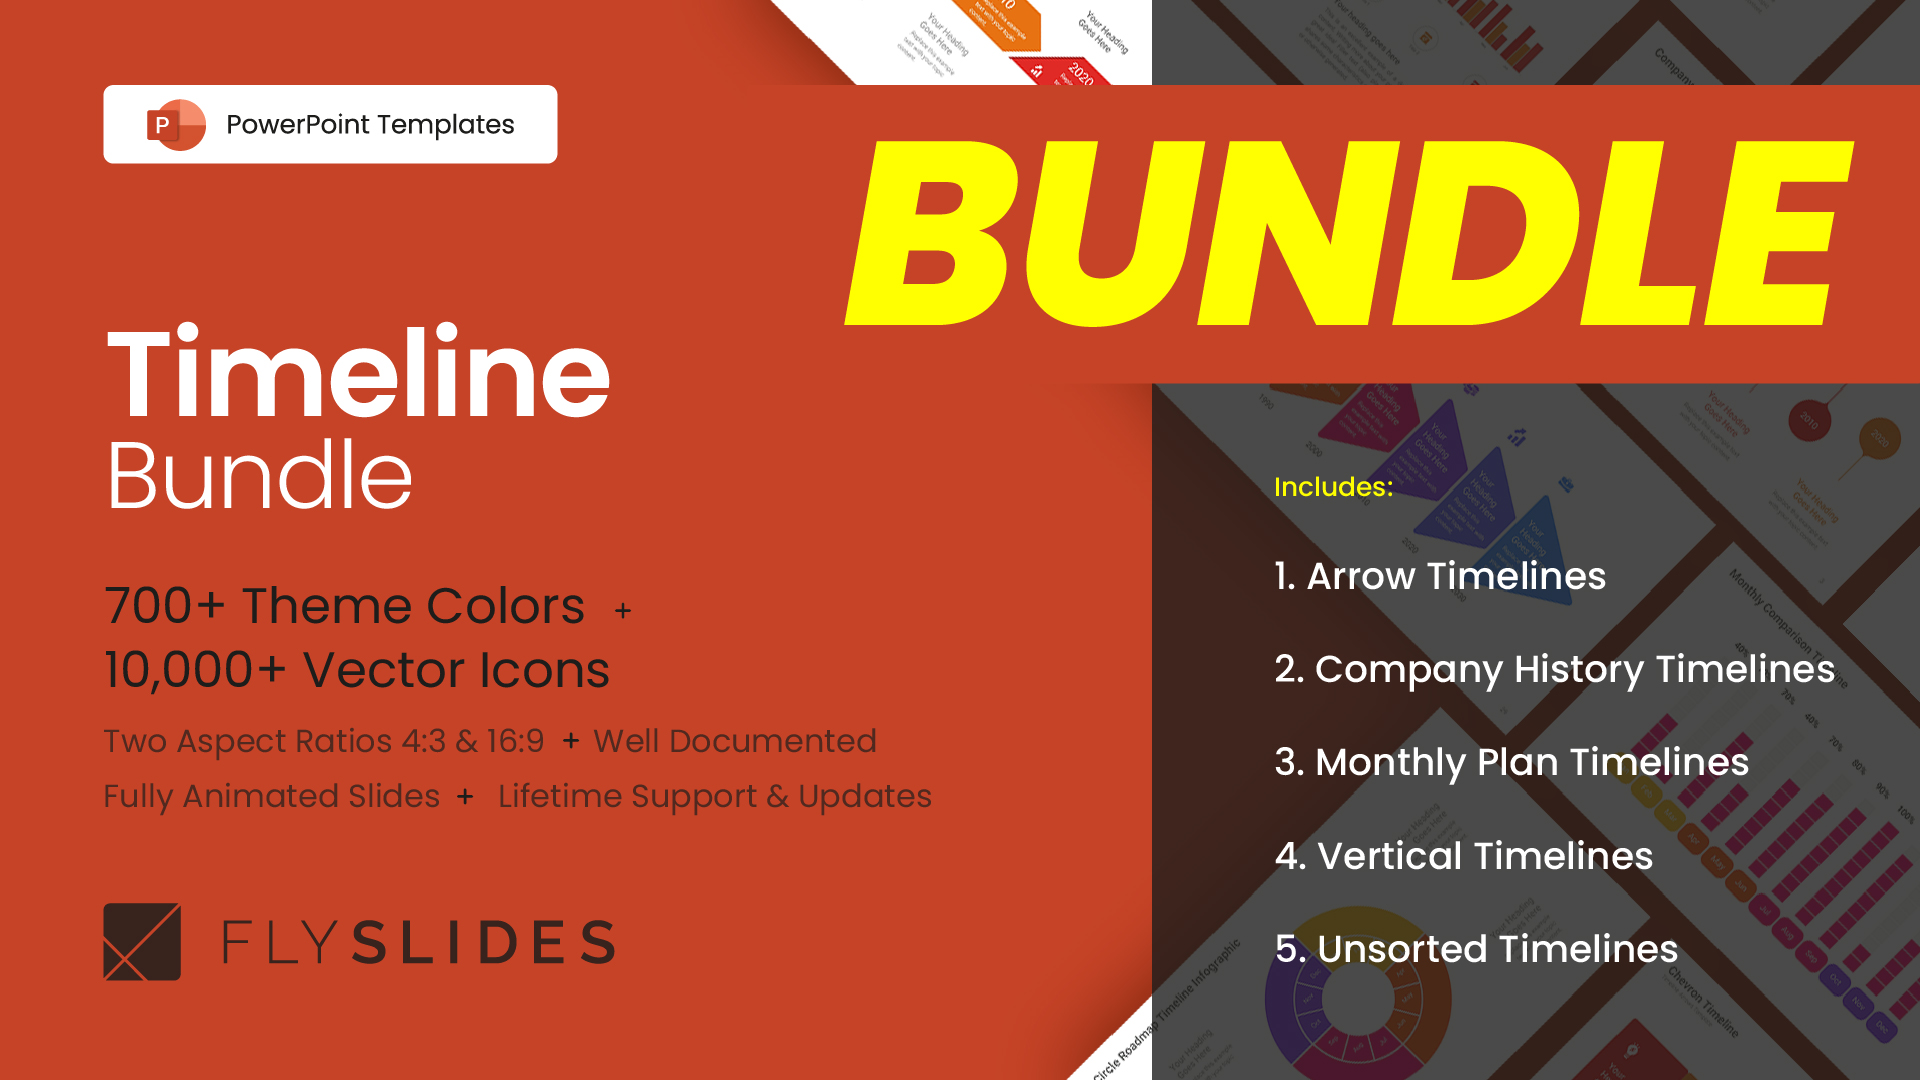 Buy Download Best Timeline Bundle PowerPoint PPT Template Slides for Presentations